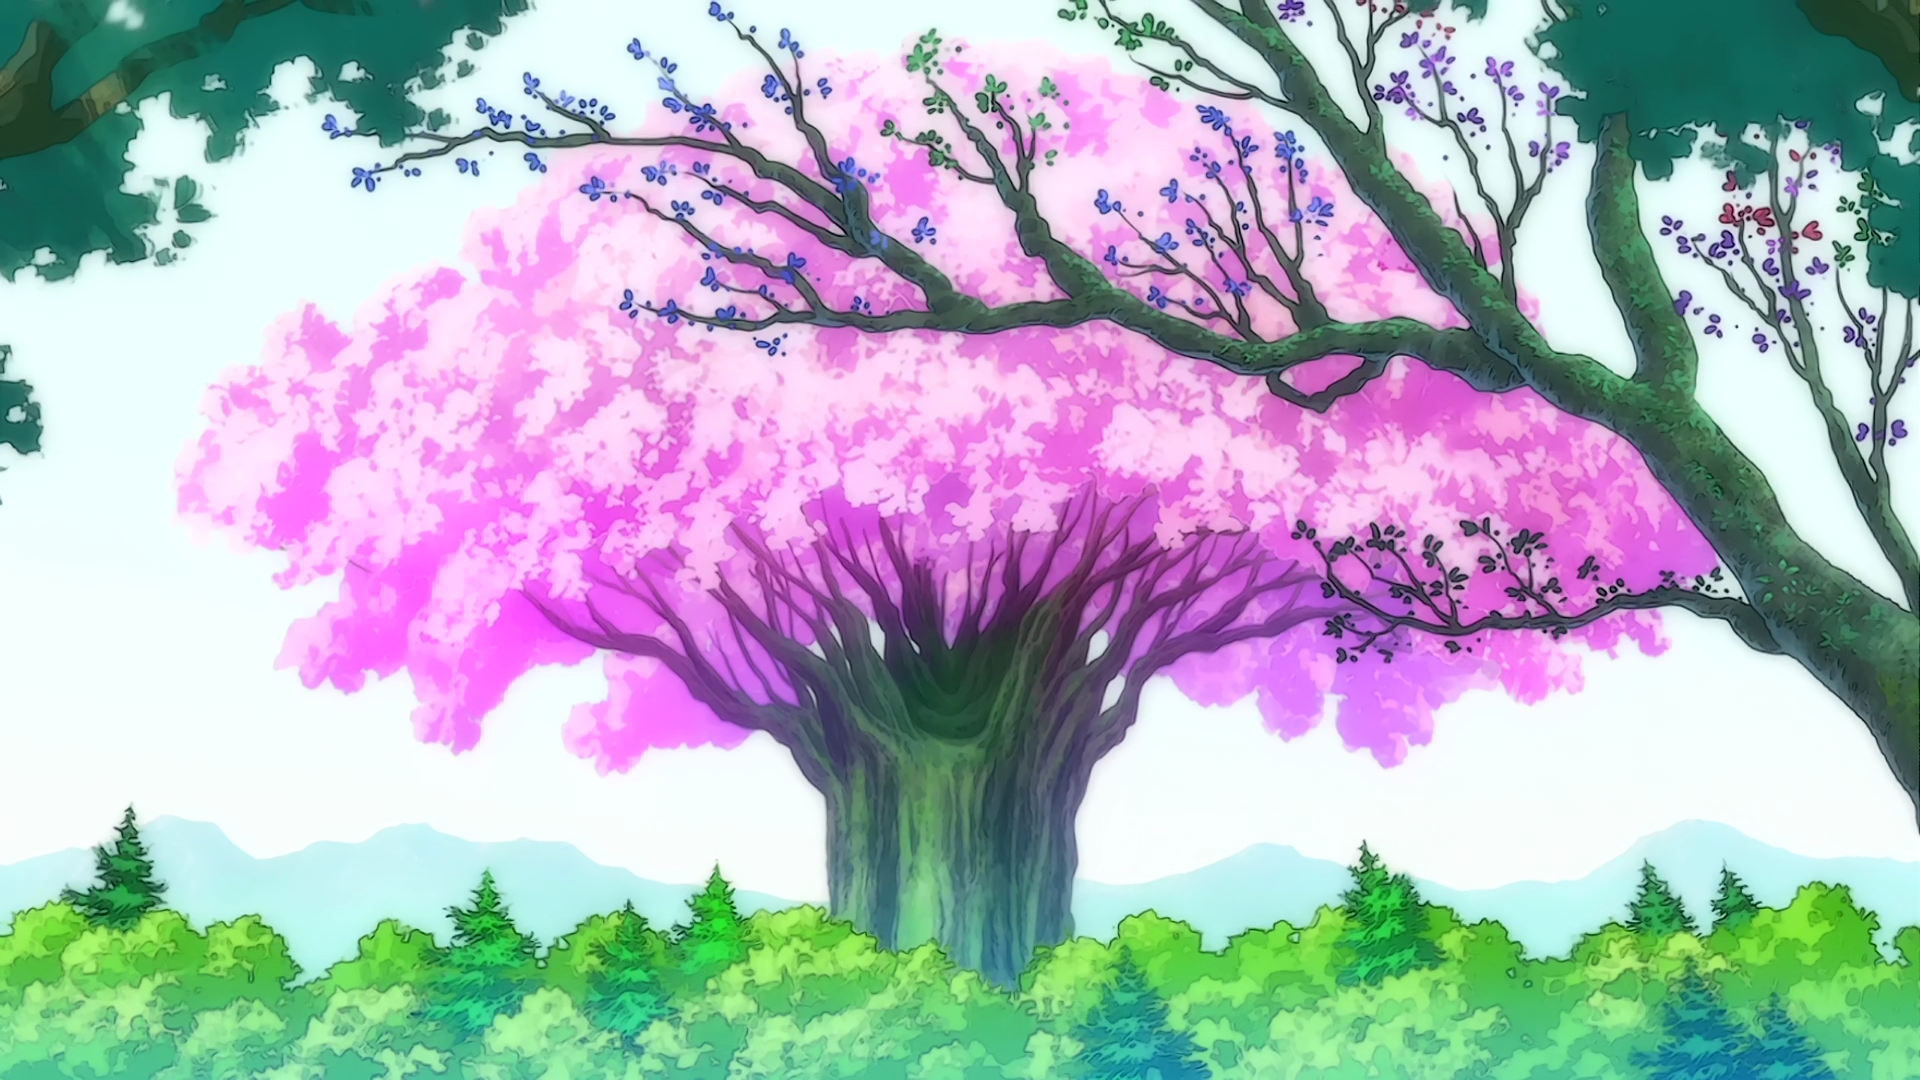 Fairy King's Forest | Nanatsu no Taizai Wiki | FANDOM powered by Wikia